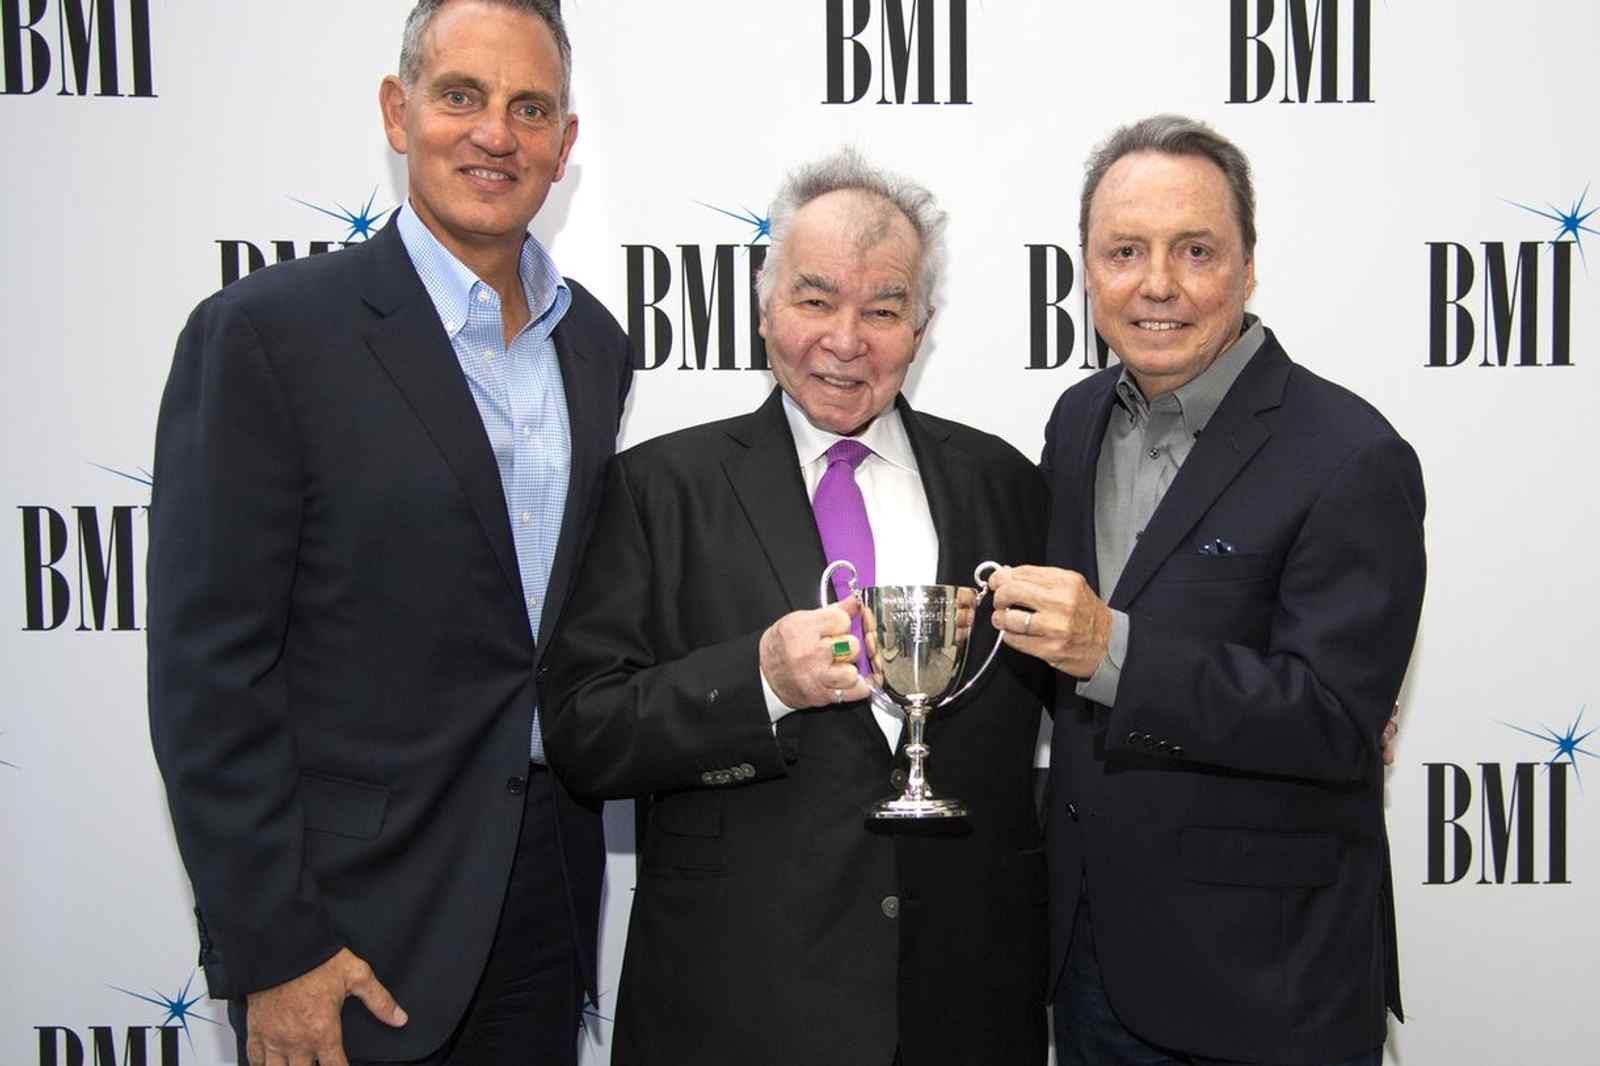 BMI Honors John Prine With Troubadour Award